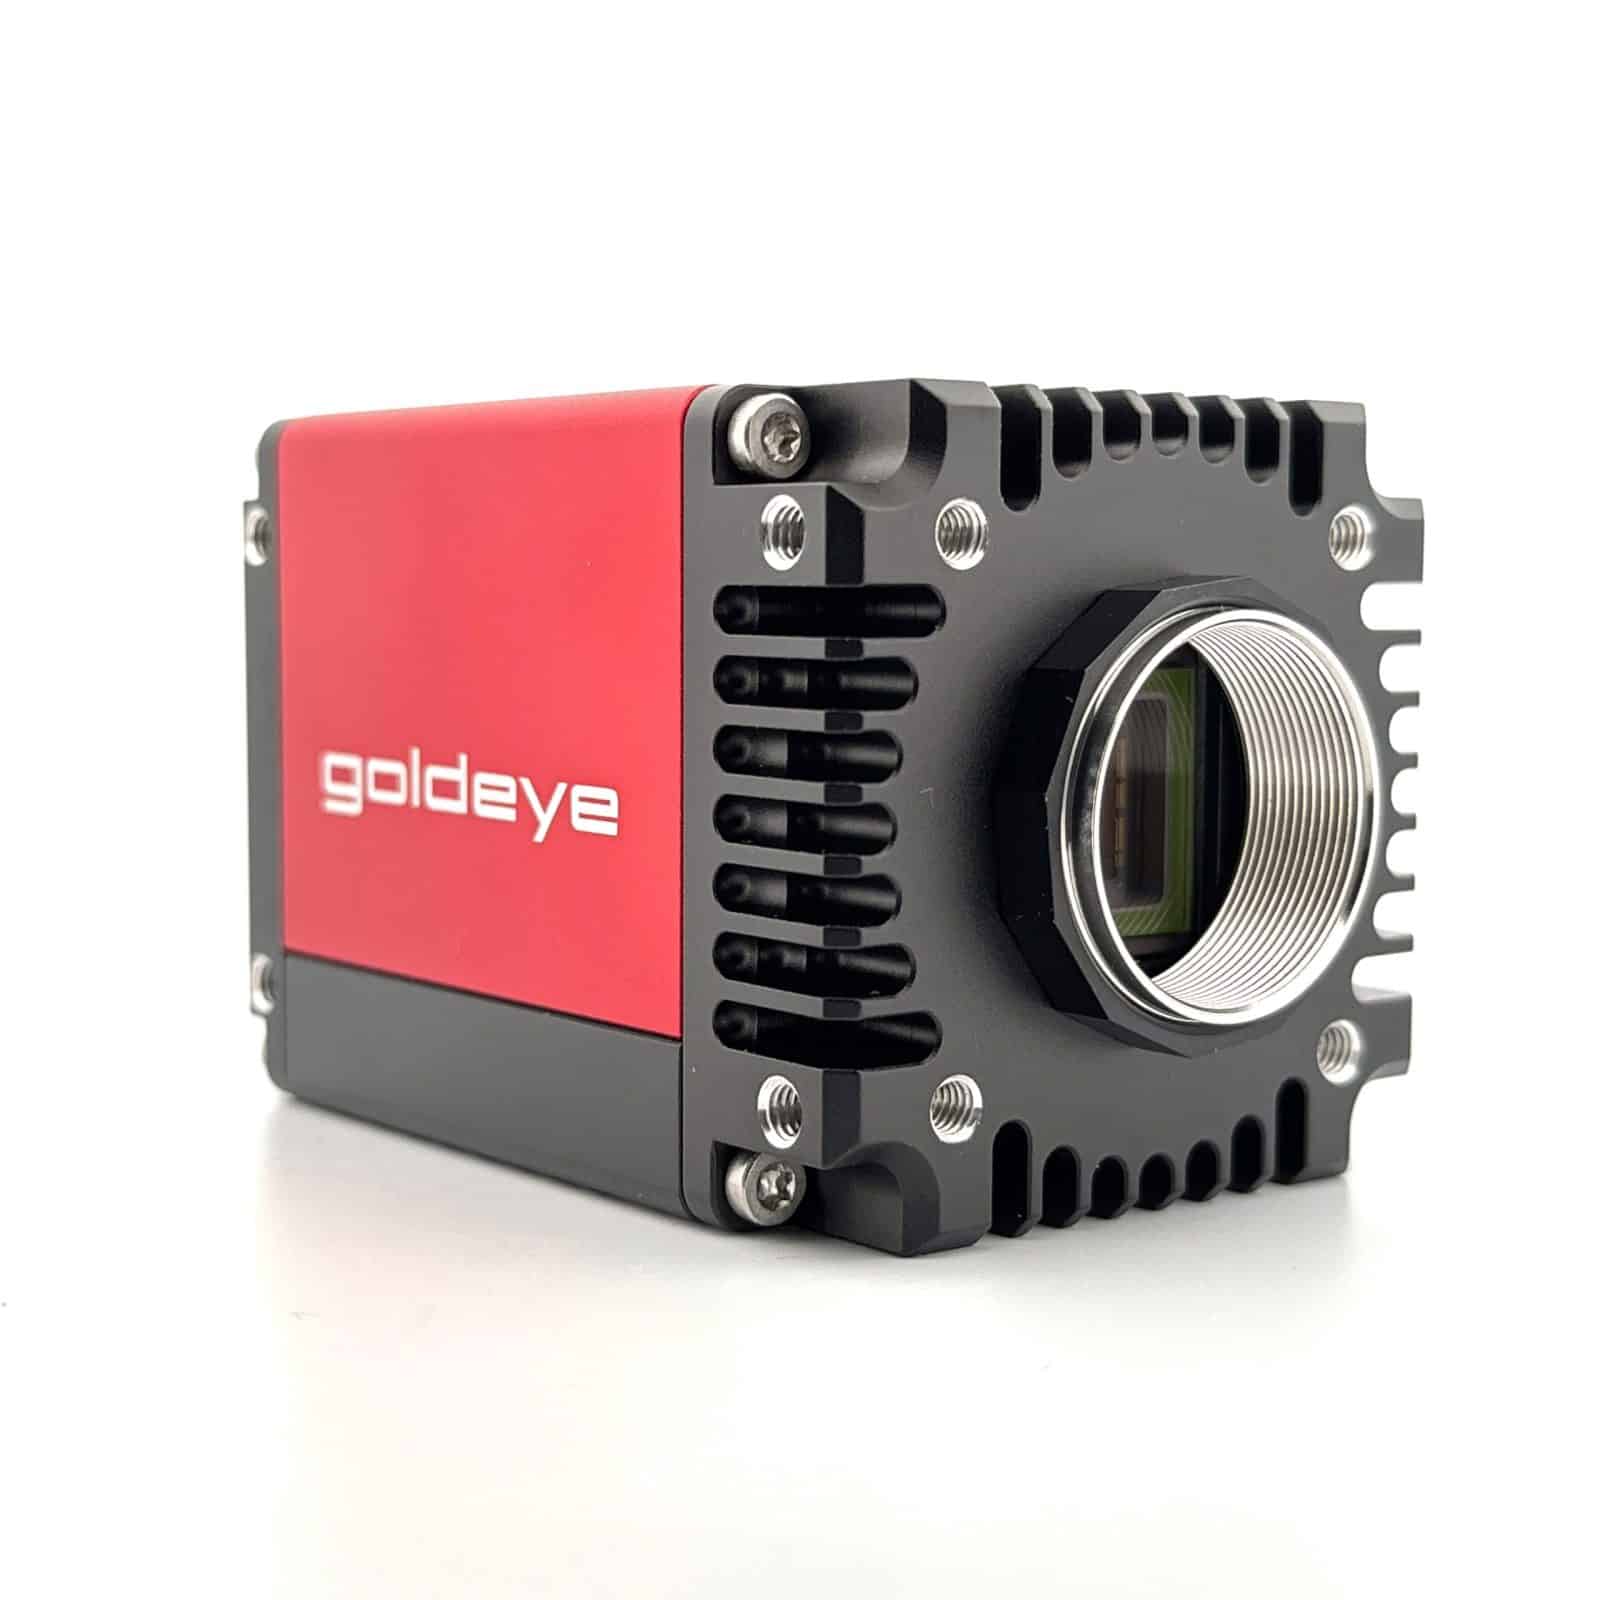 Goldeye G-130 VSWIR camera with Sony IMX990 sensor